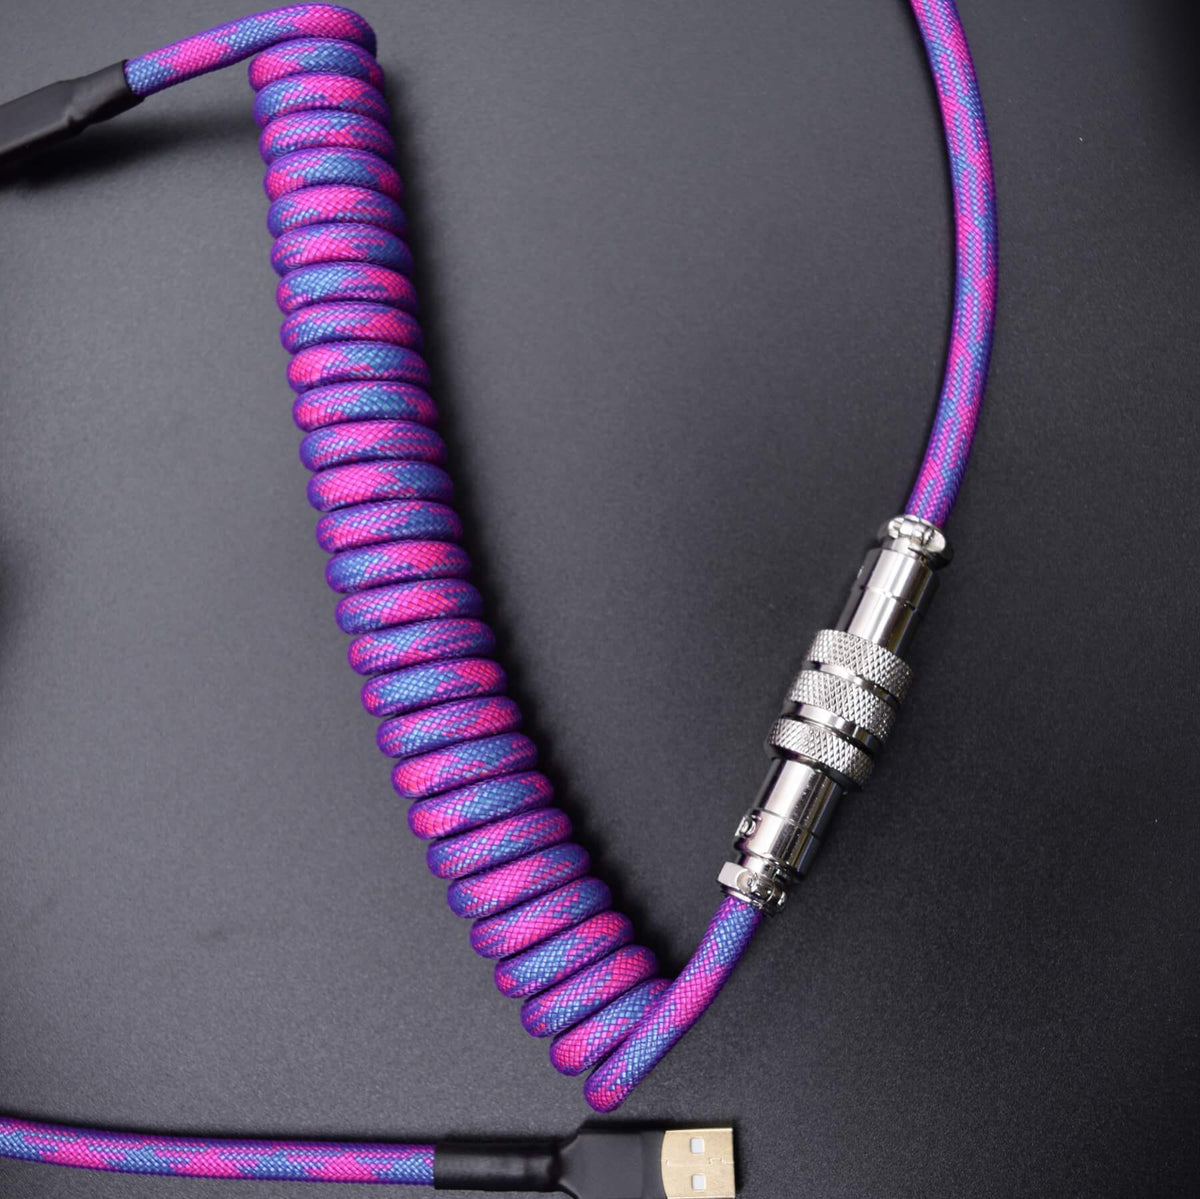 cables, jumbos, cordos - Bonbonsetdouceurs